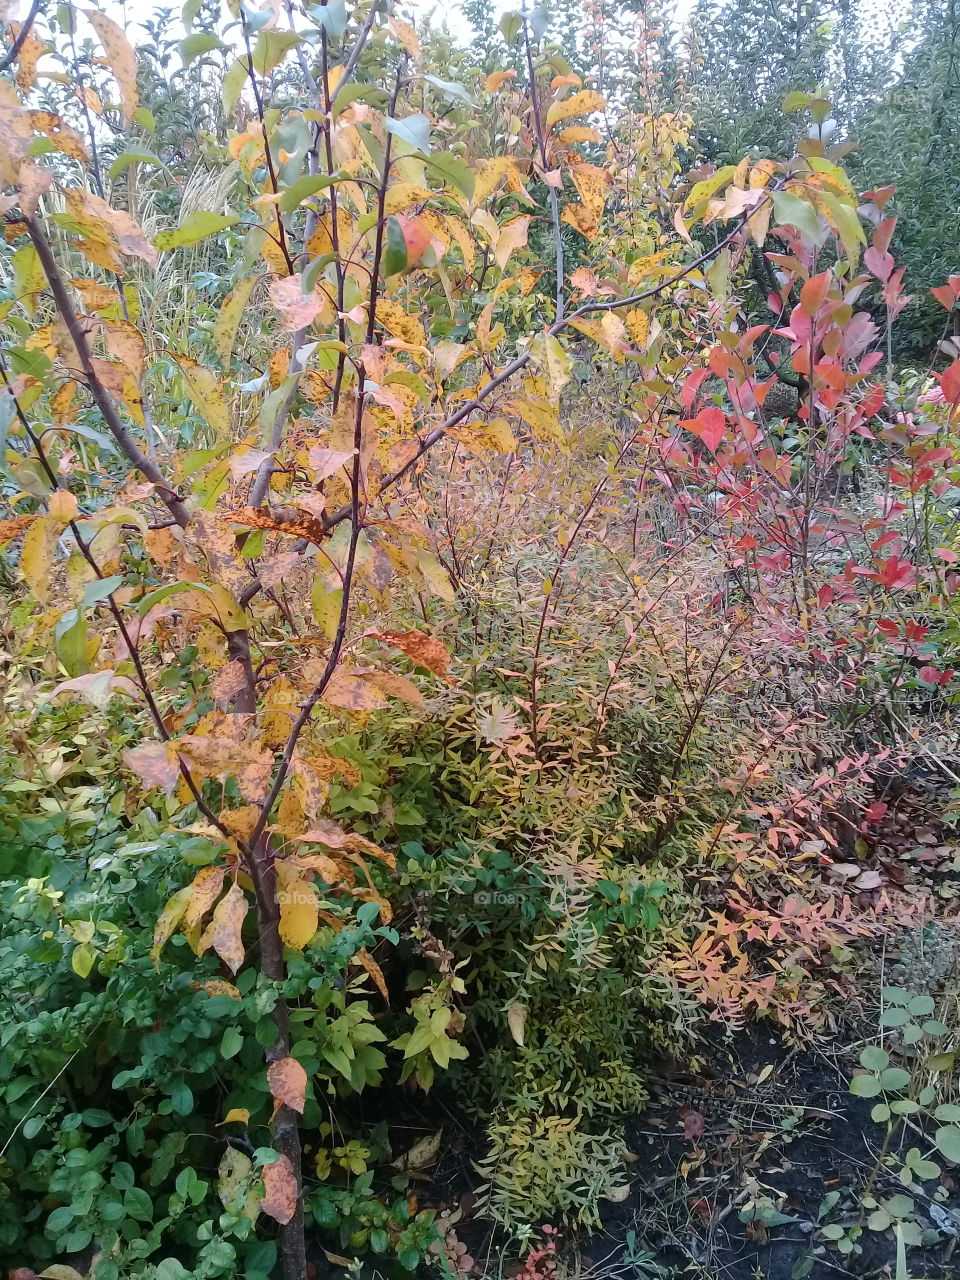 Autumn comes to my garden.